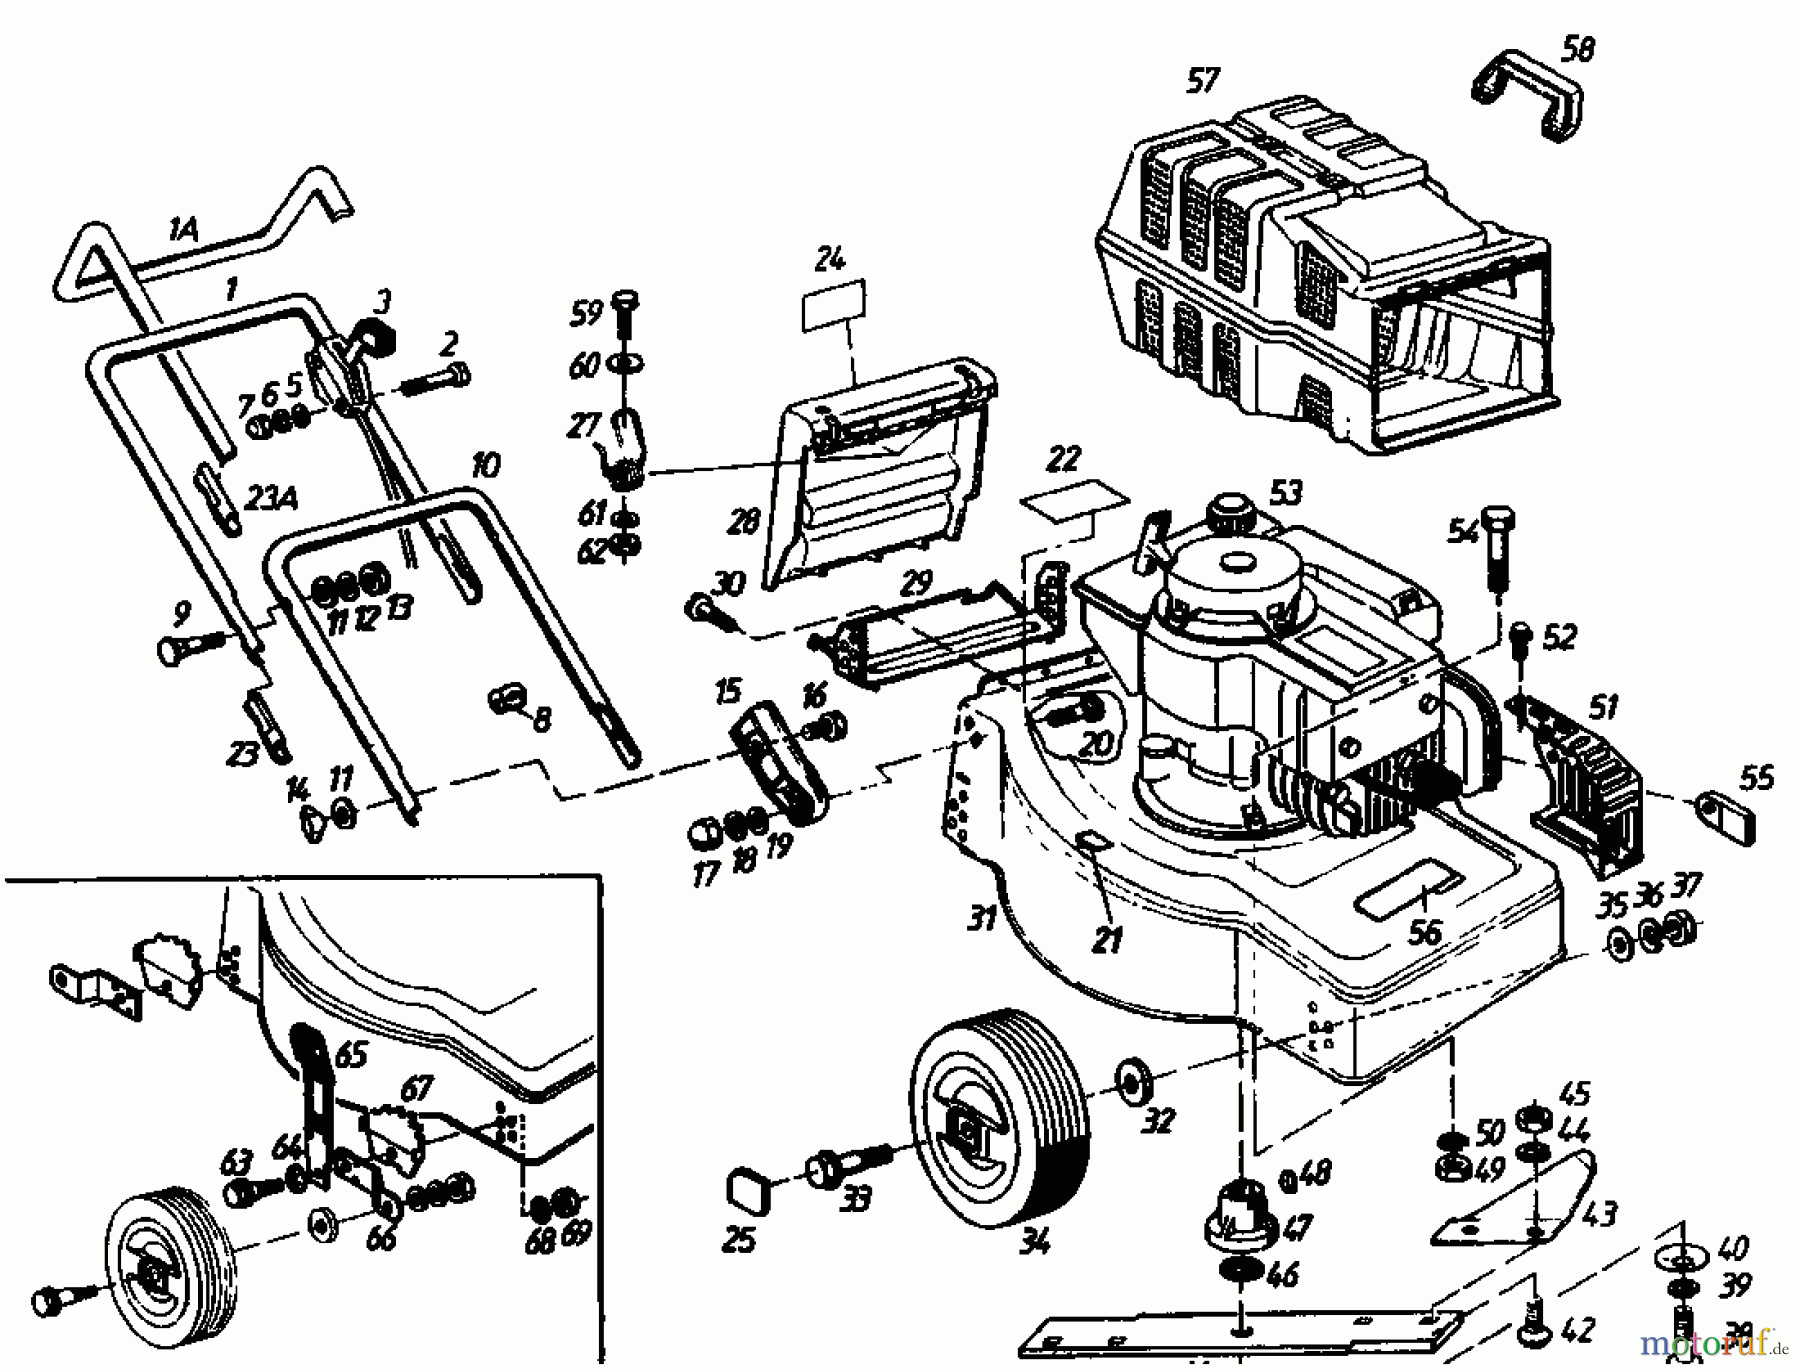  Golf Petrol mower HB 02880.03  (1985) Basic machine